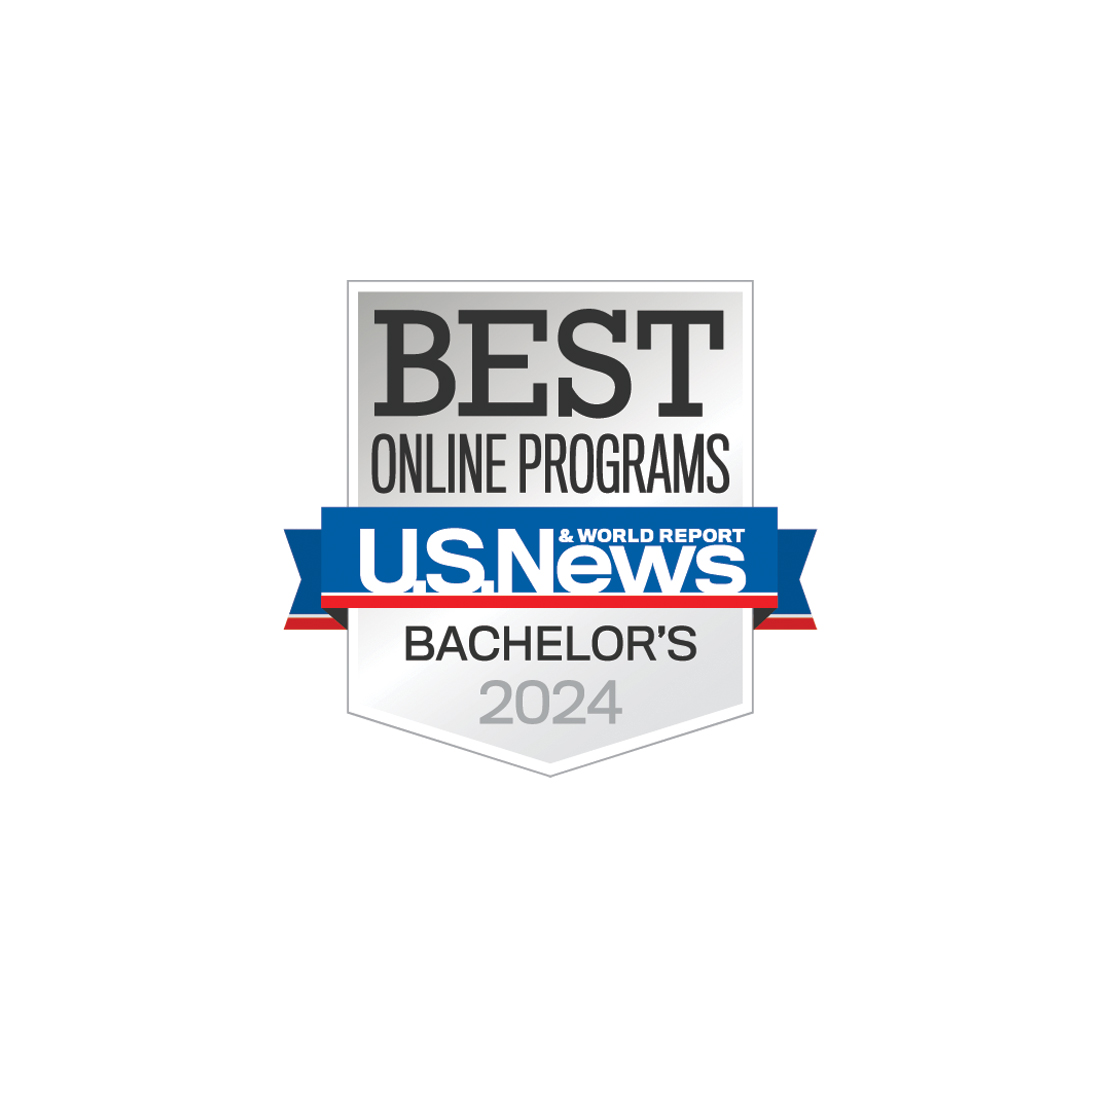 A Best Online Programs Bachelor's 2024 U.S. News & World Report badge.